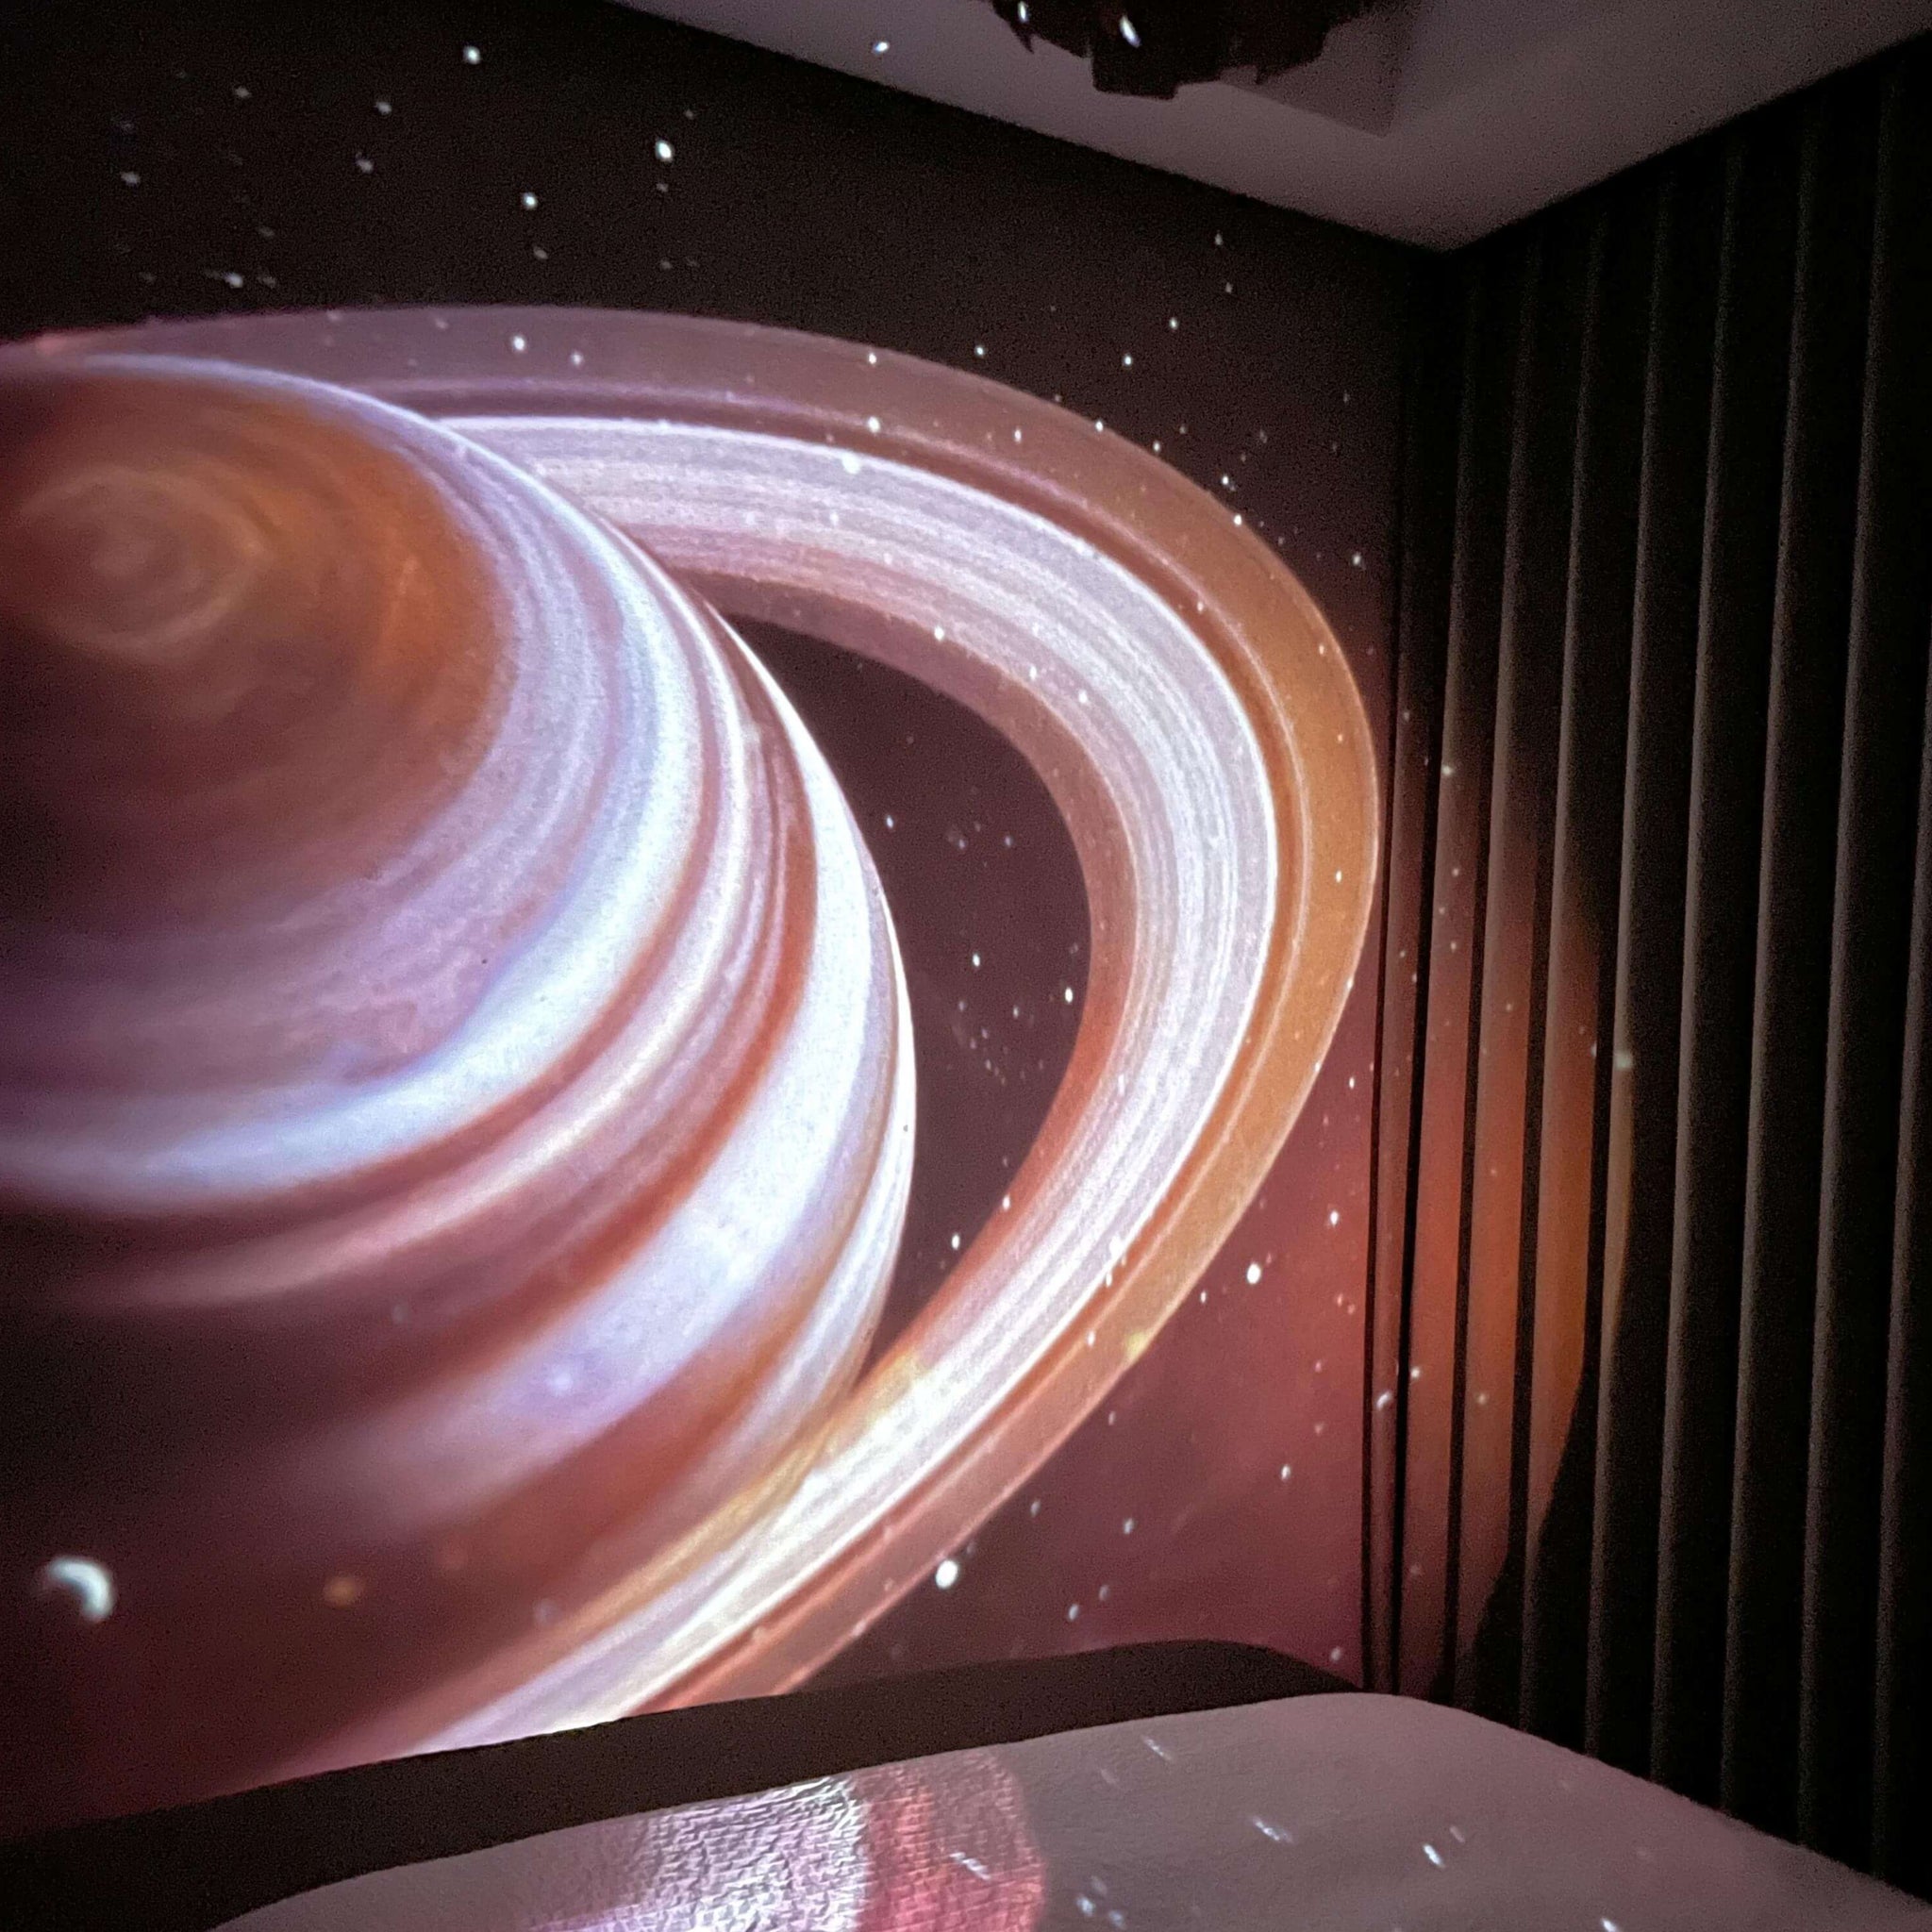 Immersive Planet - Discs for POCOCO Galaxy Projector, 5k Ultra HD